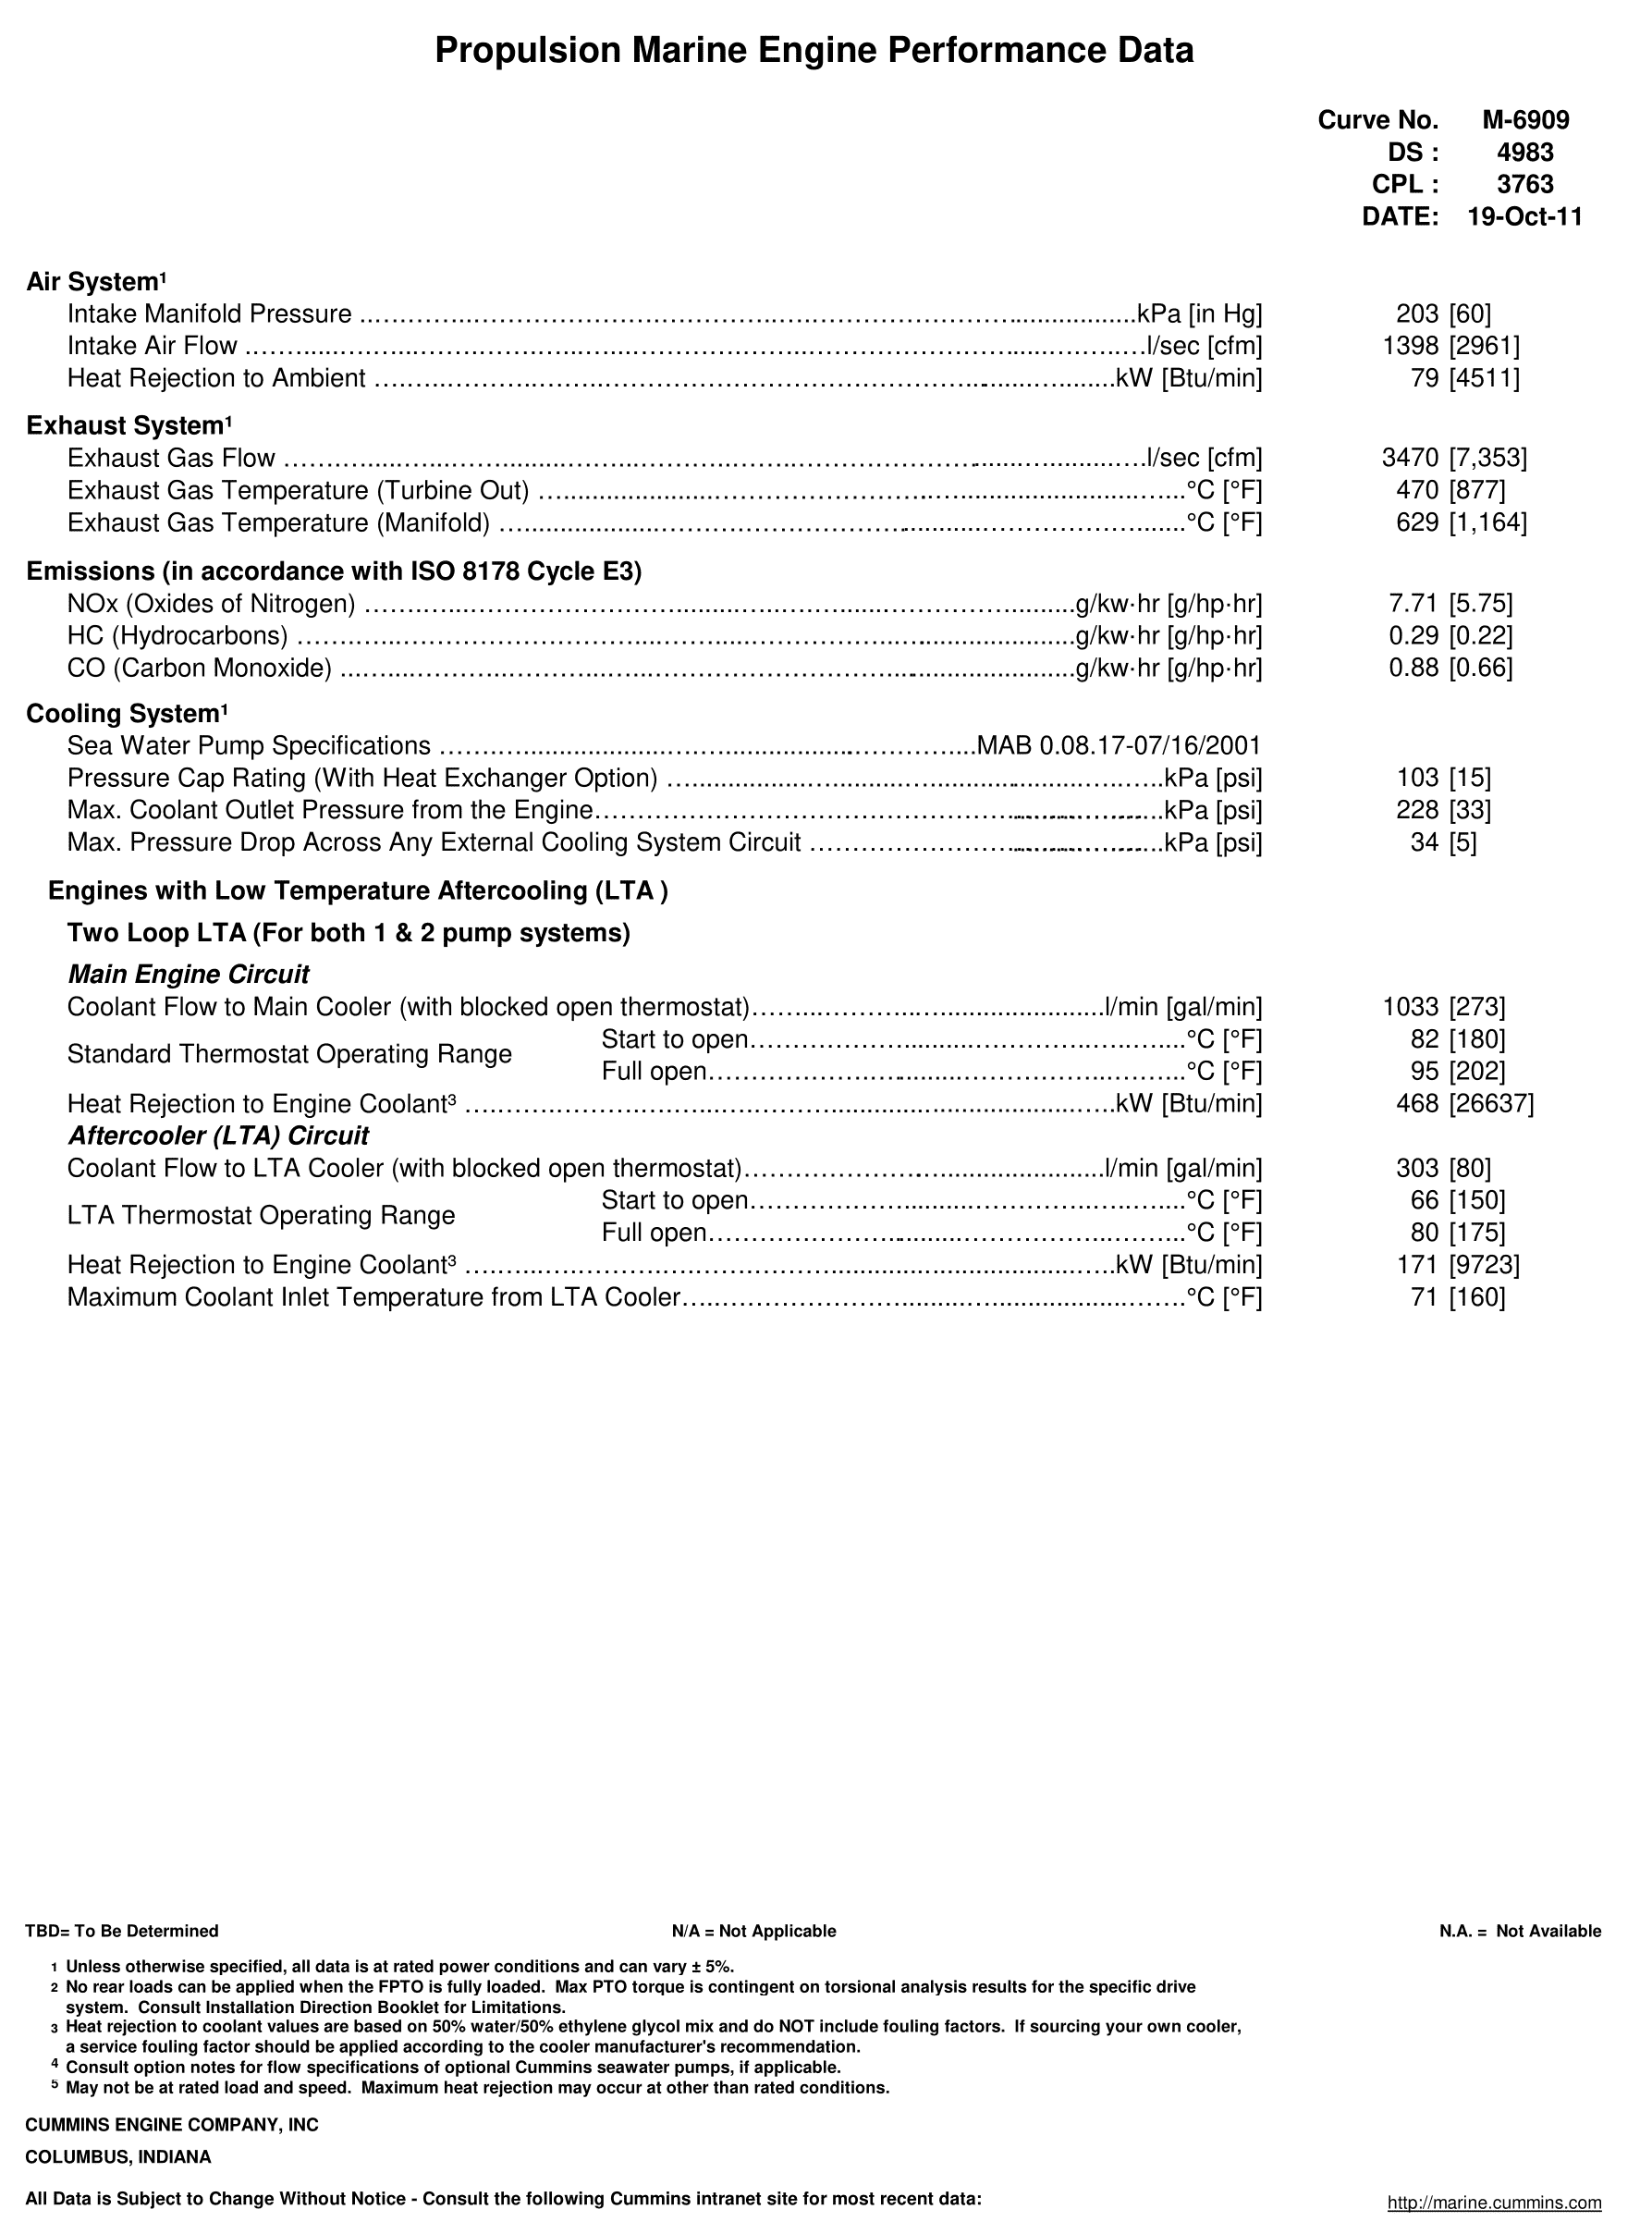 Cummins KTA38-M2 1350 HP datasheet